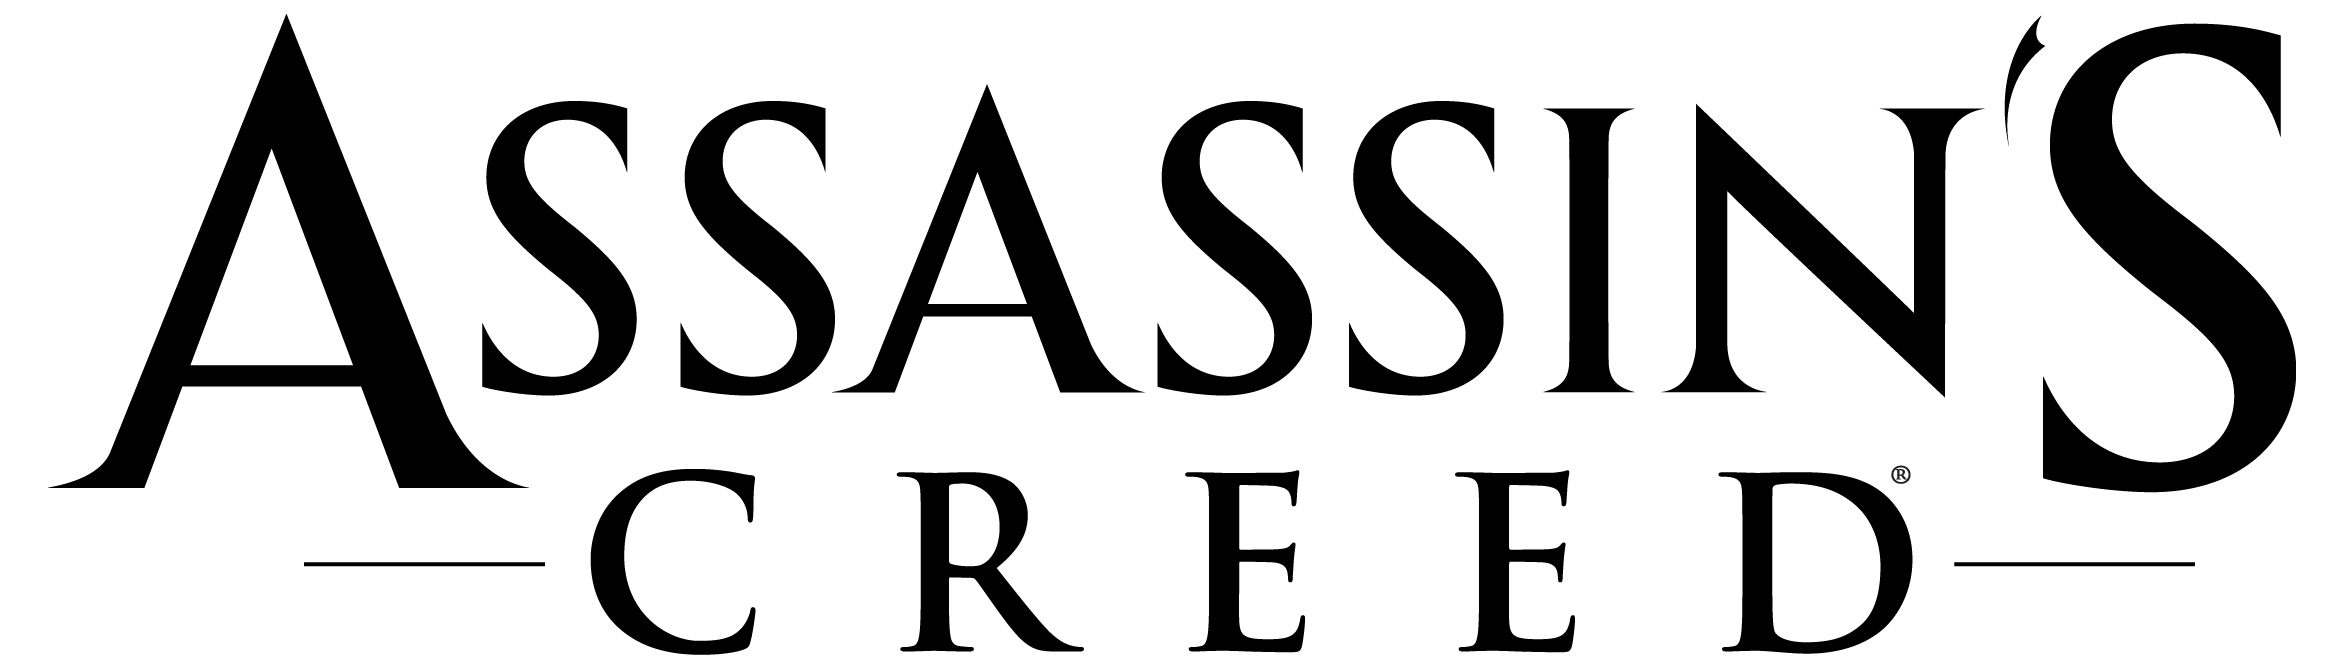 Assassin’s Creed Logo PNG Photo Clip Art Image